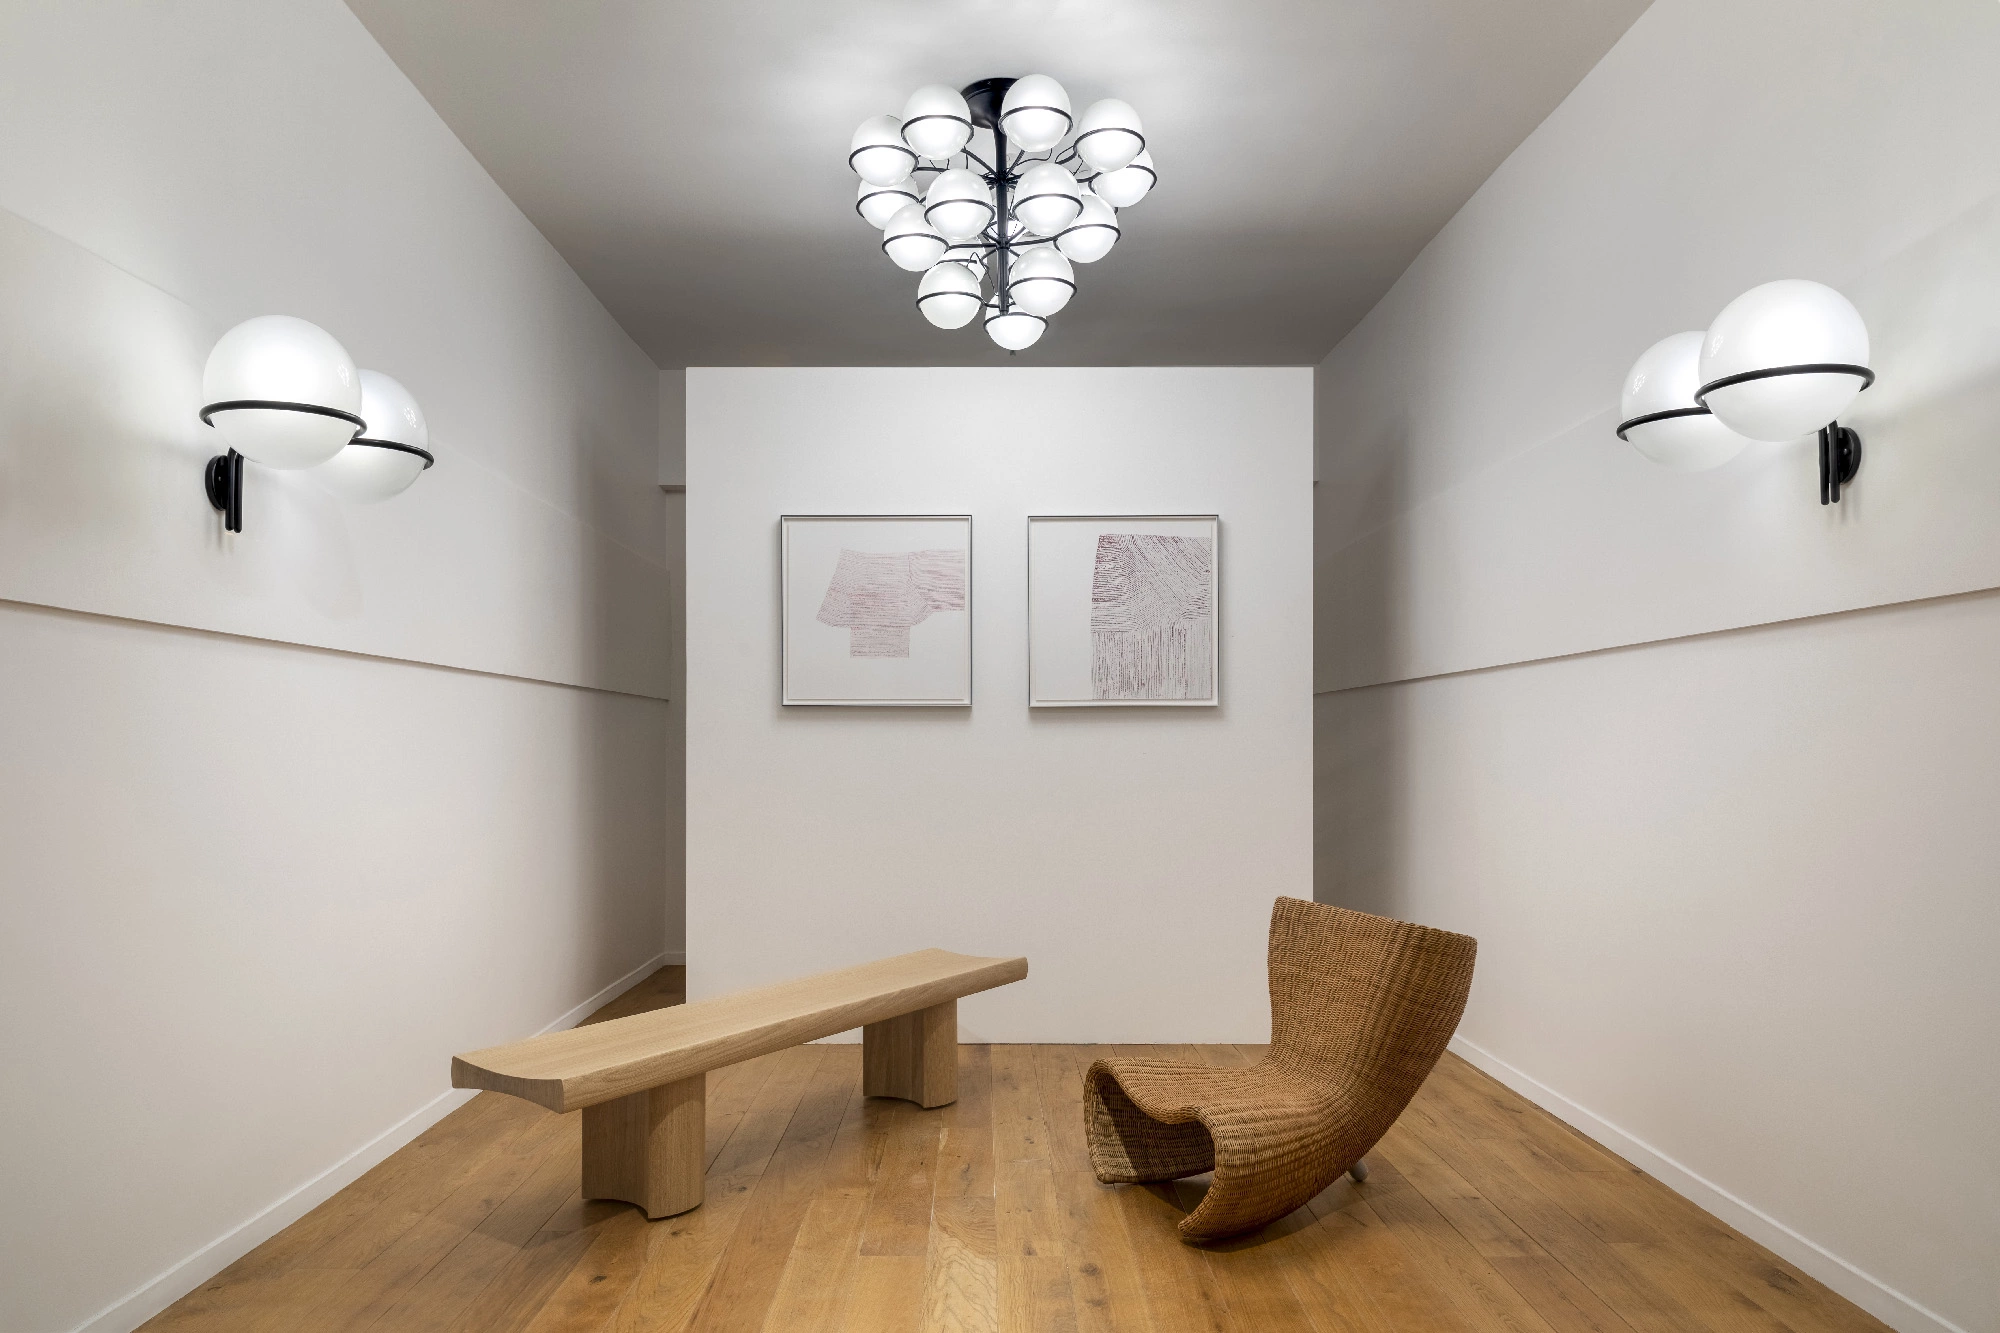 Wicker Chair - Marc Newson - Seating - Galerie kreo